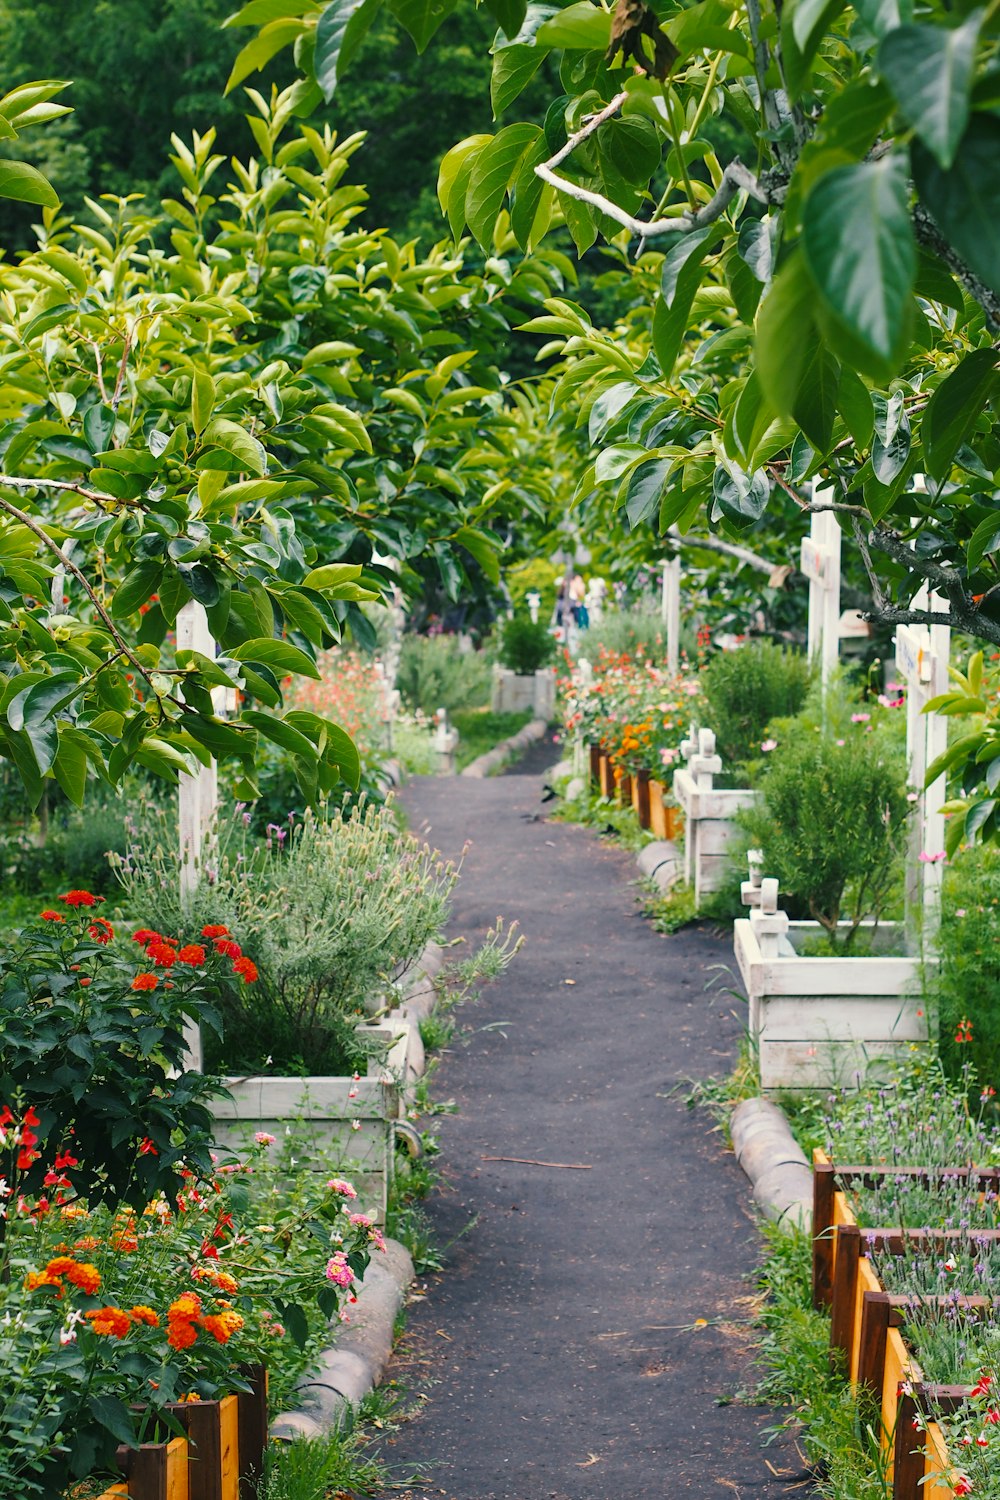 How To Choose The Best Garden Supplies